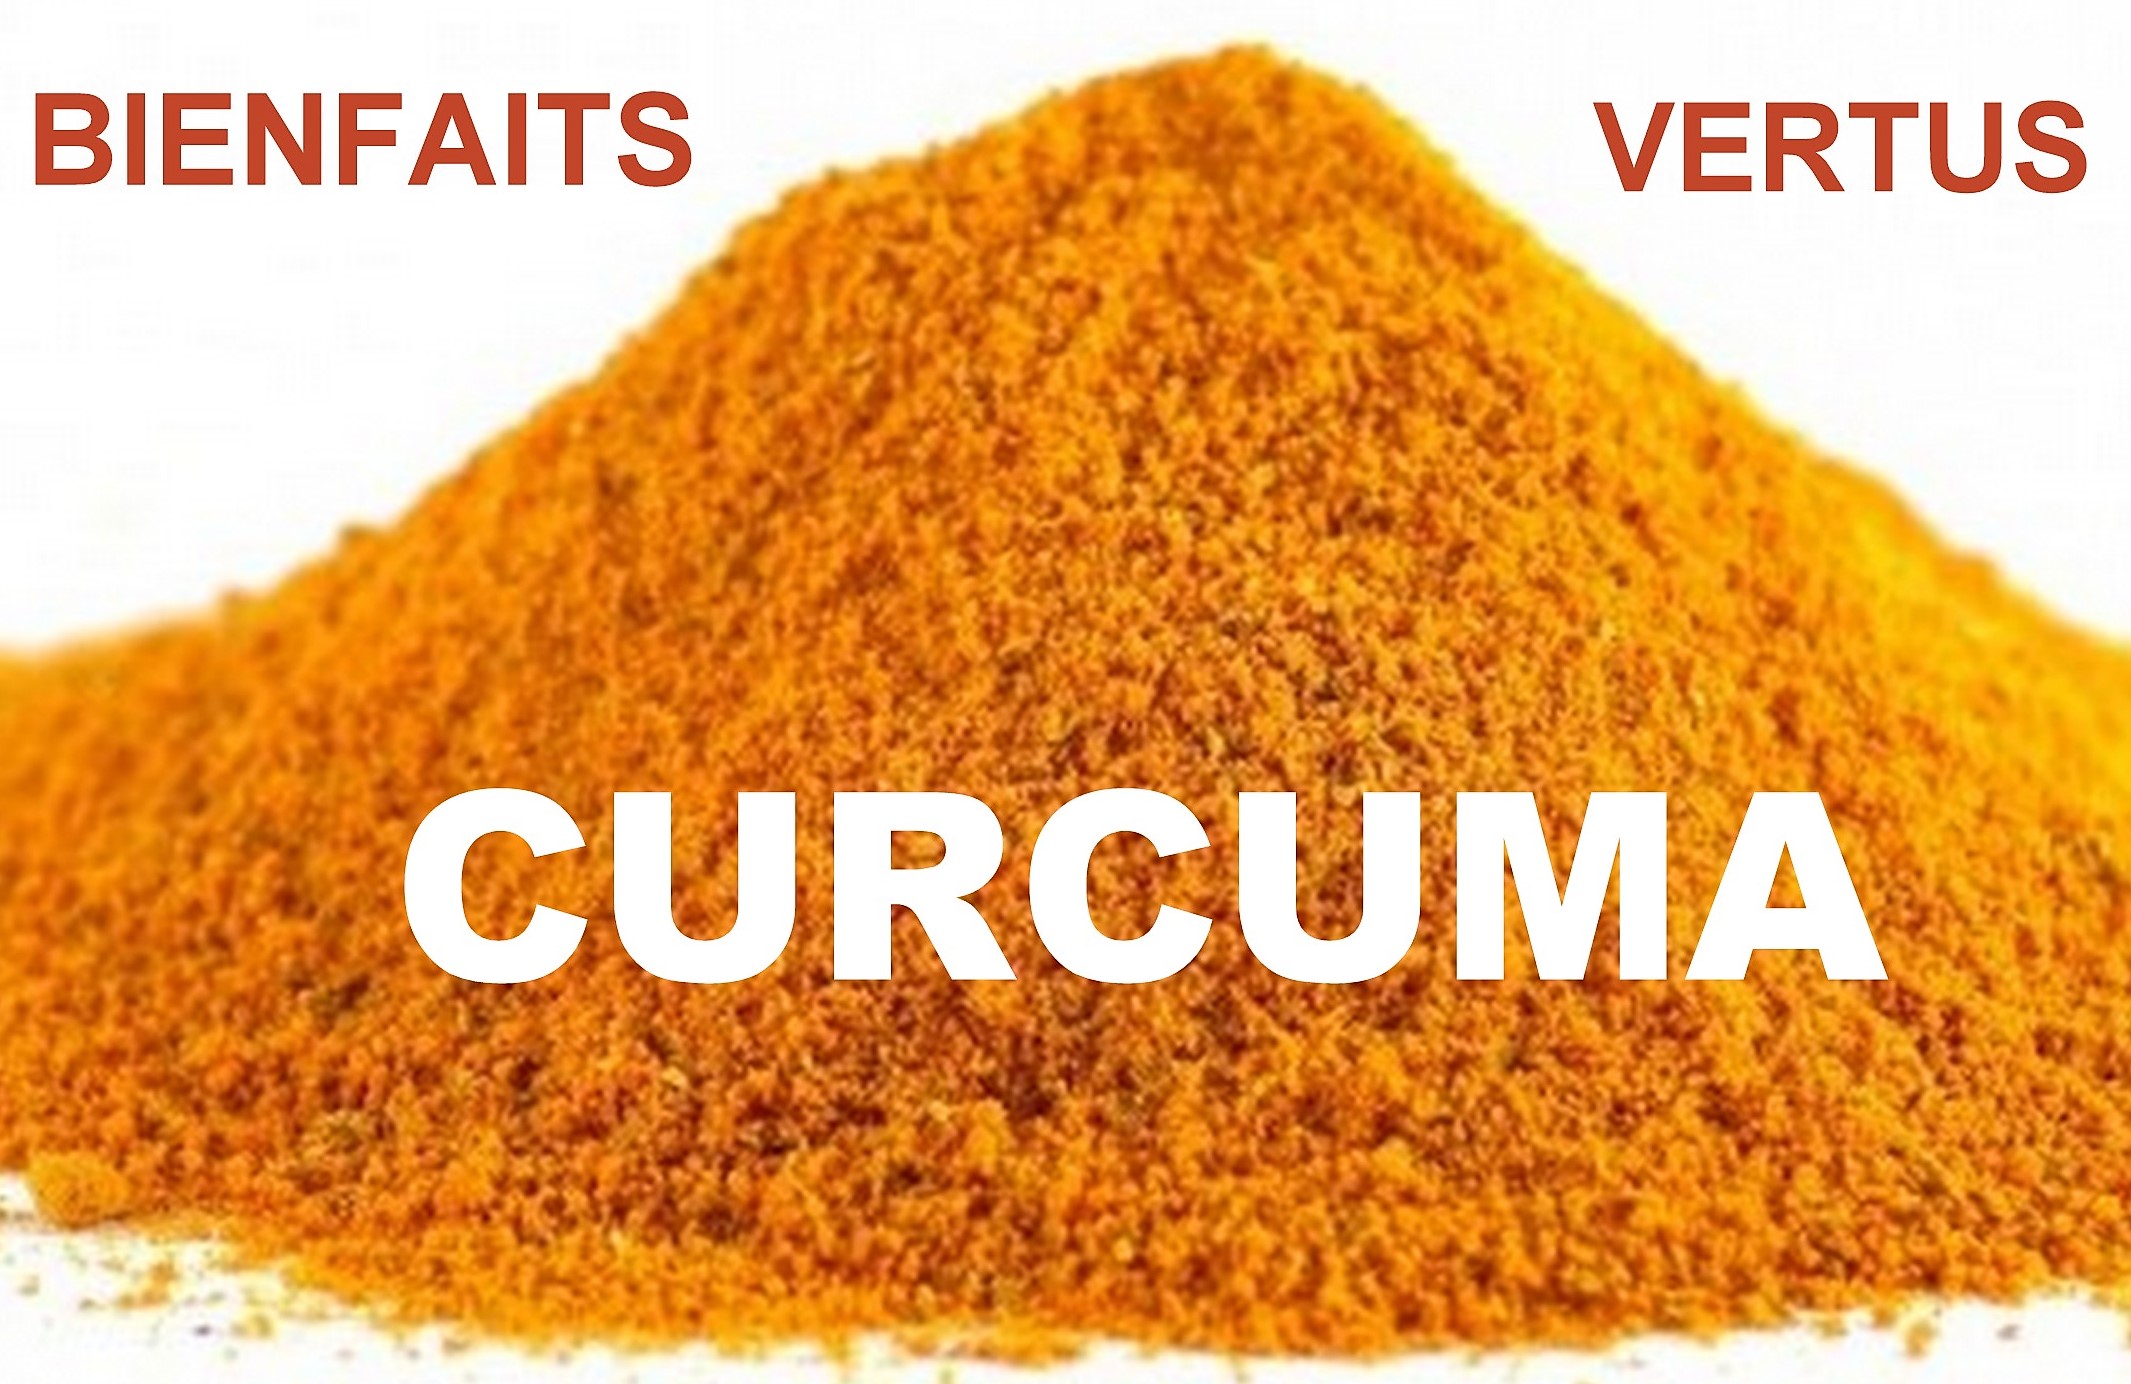 Le Curcuma : antioxydant, anti-inflammatoire, anti-tumoral.